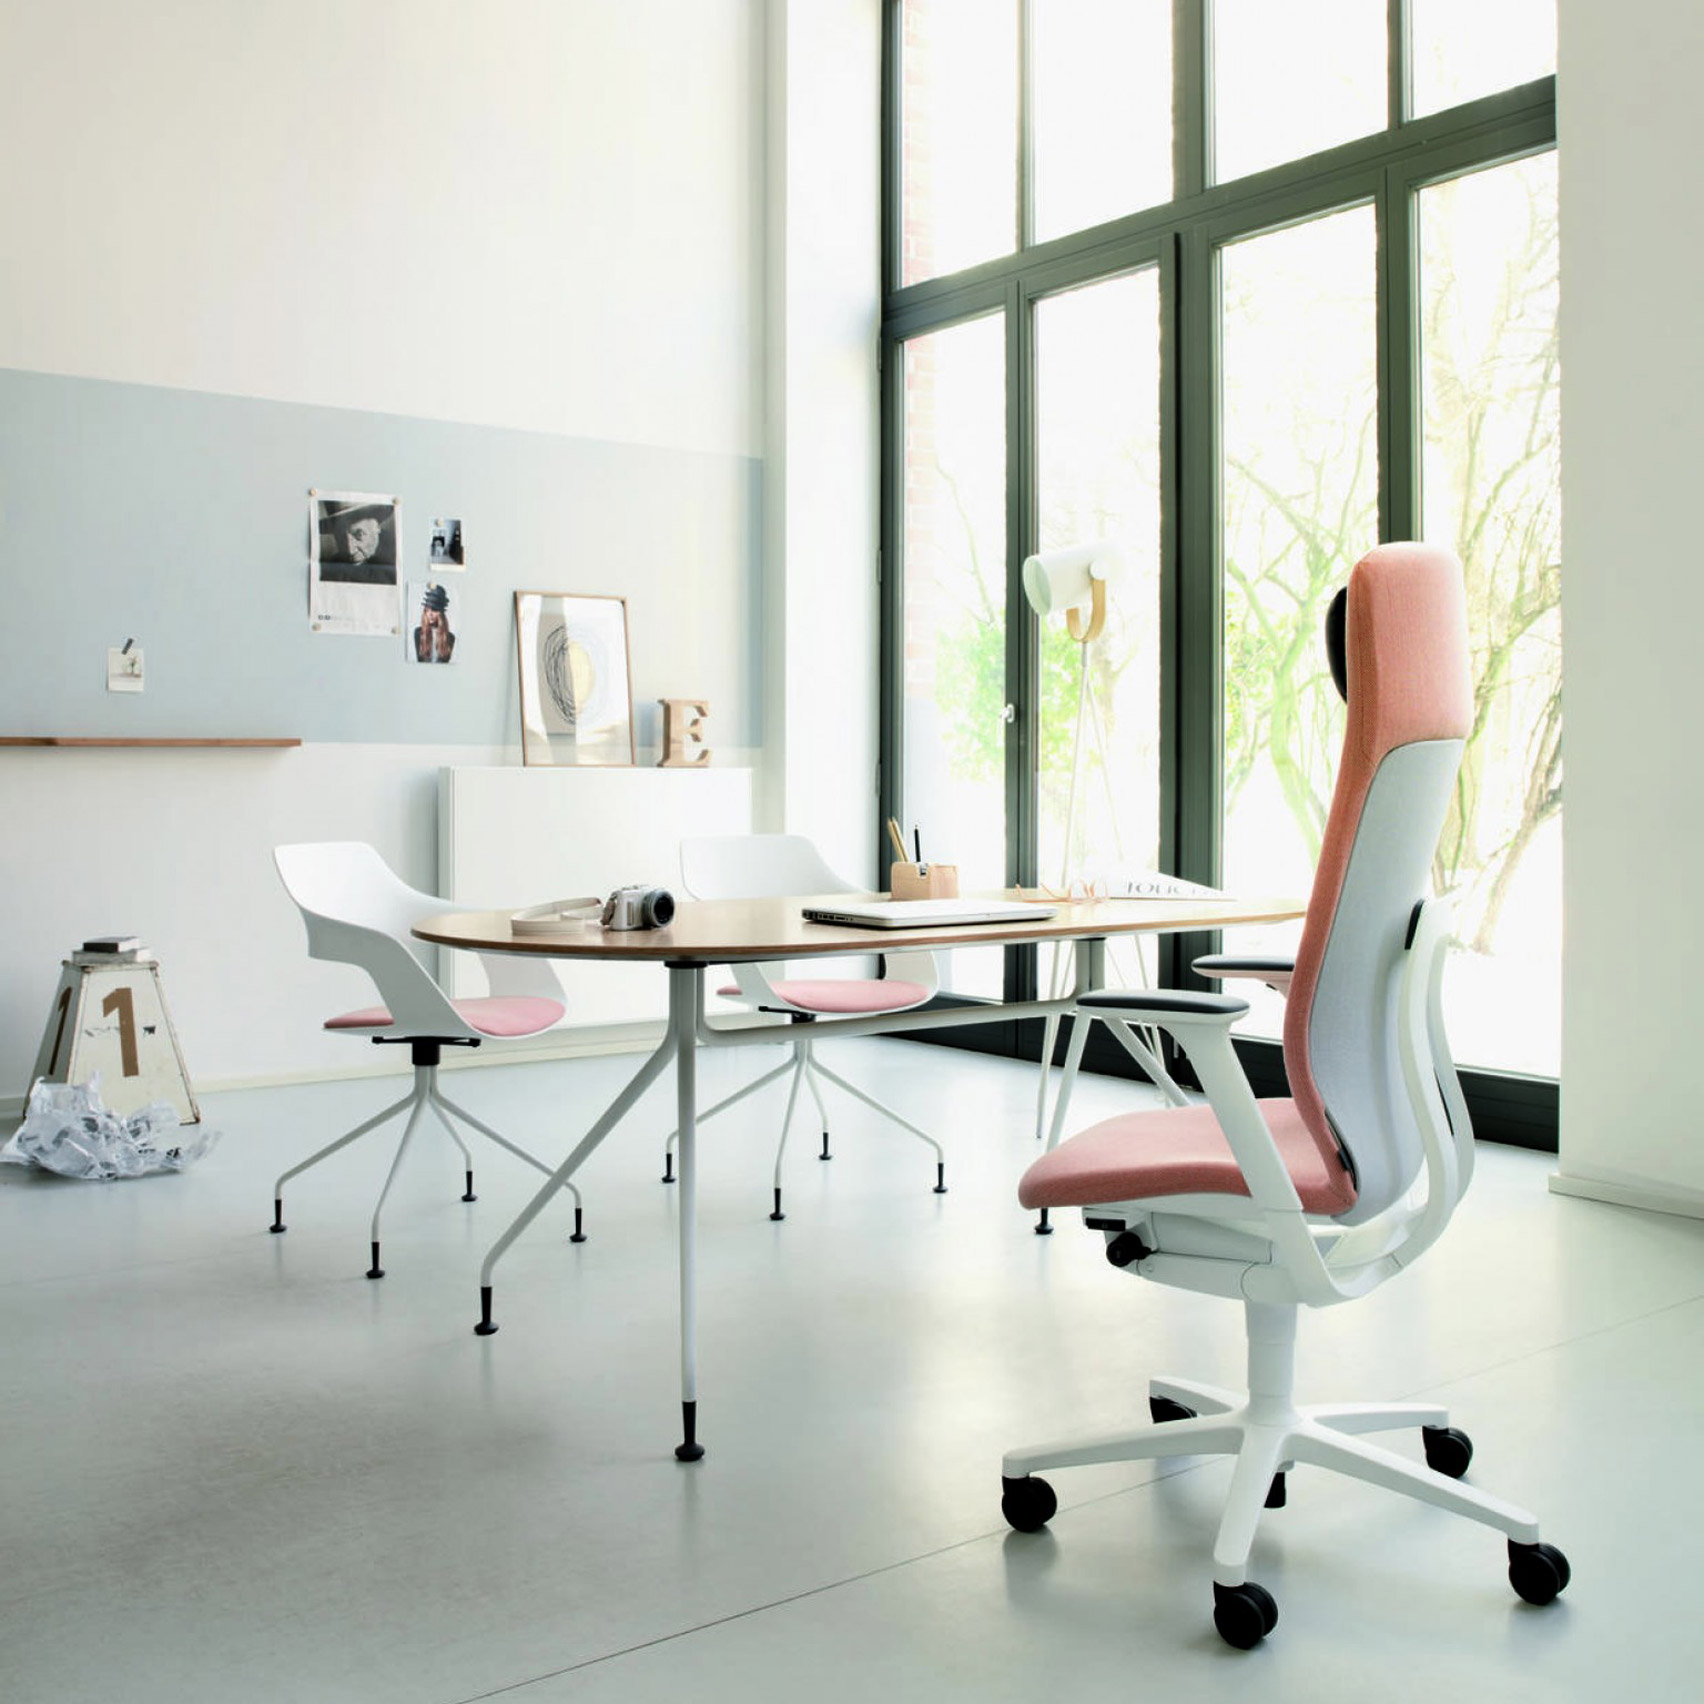 https://static.dezeen.com/uploads/2019/09/at-187-workplace-ergonomic-chair-wilkahn-germany_sq-b.jpg